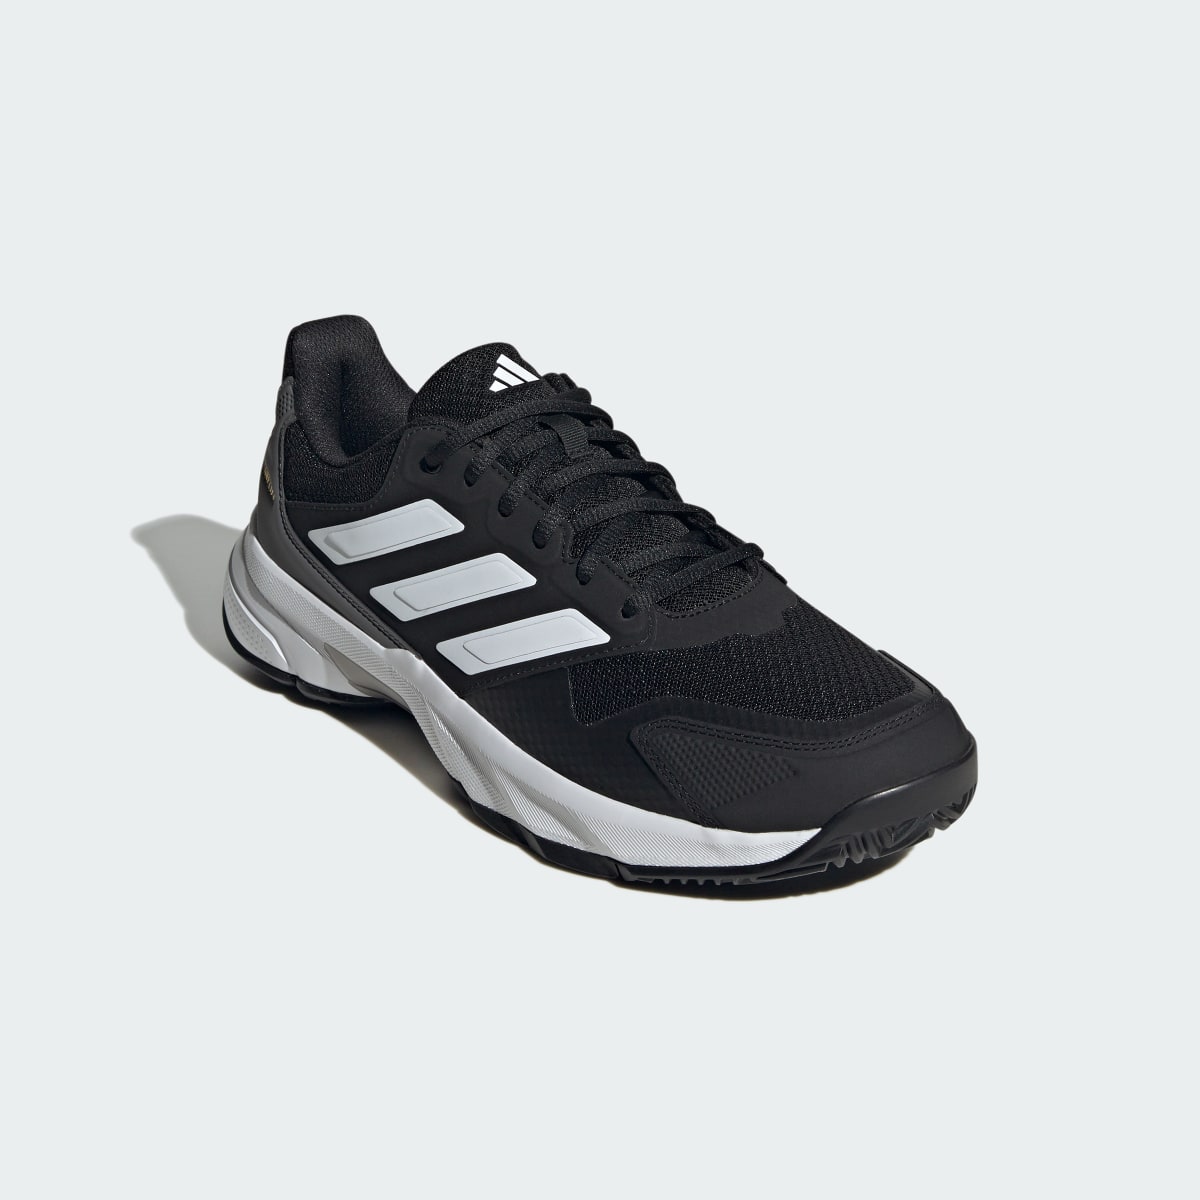 Adidas Courtjam Control 3 Tenis Ayakkabısı. 5